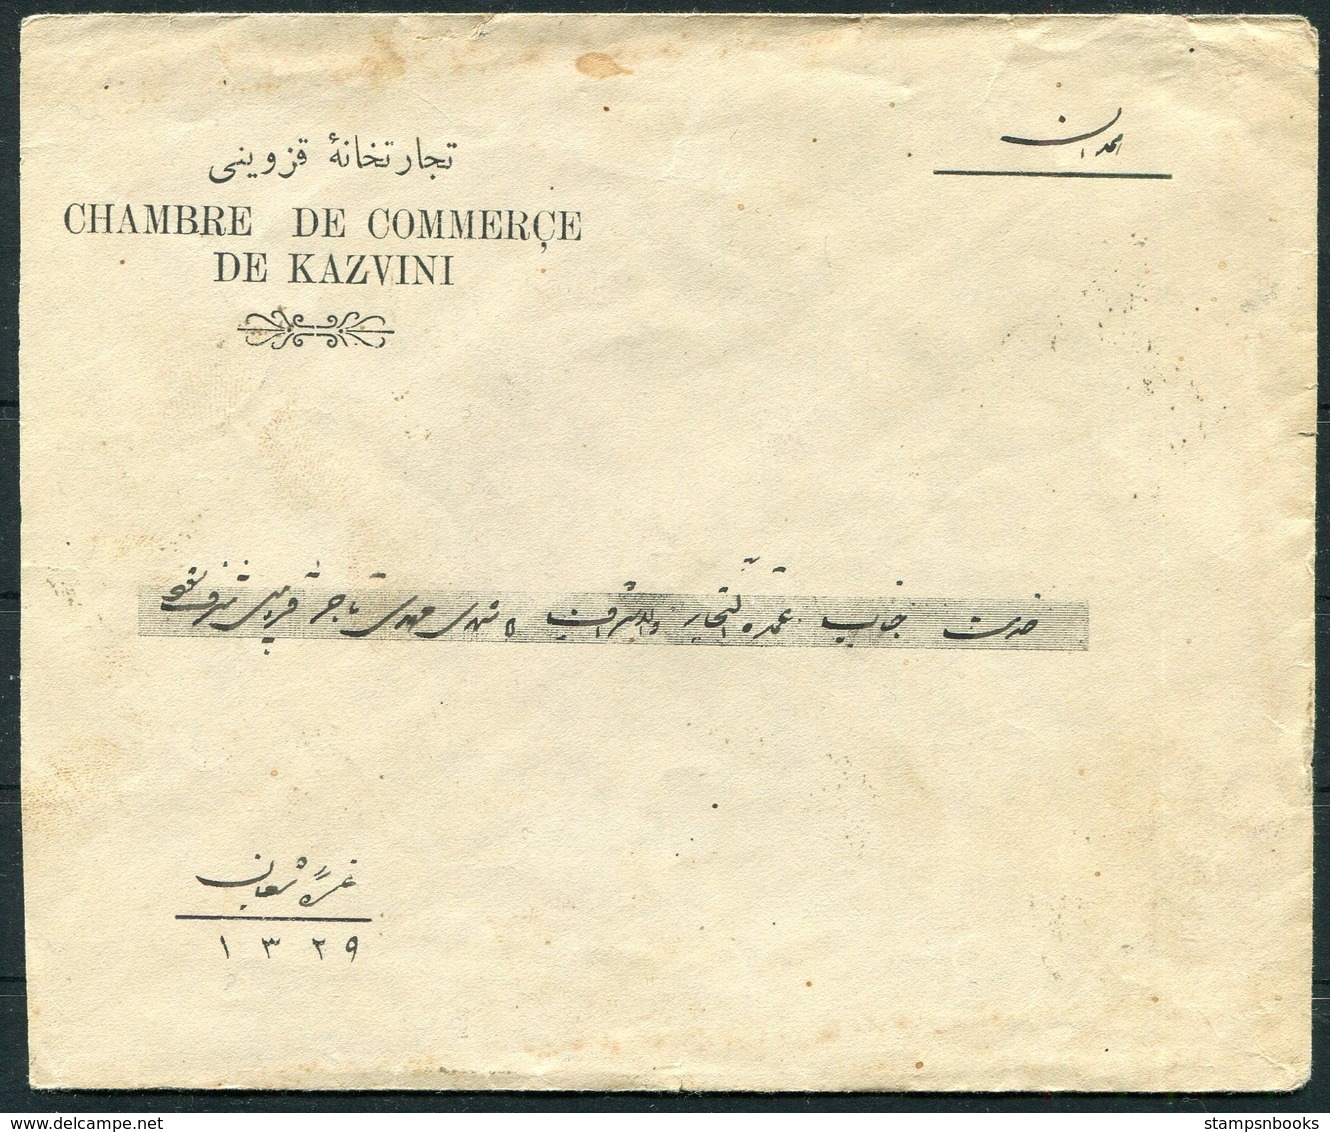 1911 Persia Ahmad Shah 6ch Cover. Kazvin Chamber Of Commerce - Tauris - Hamadan - Iran